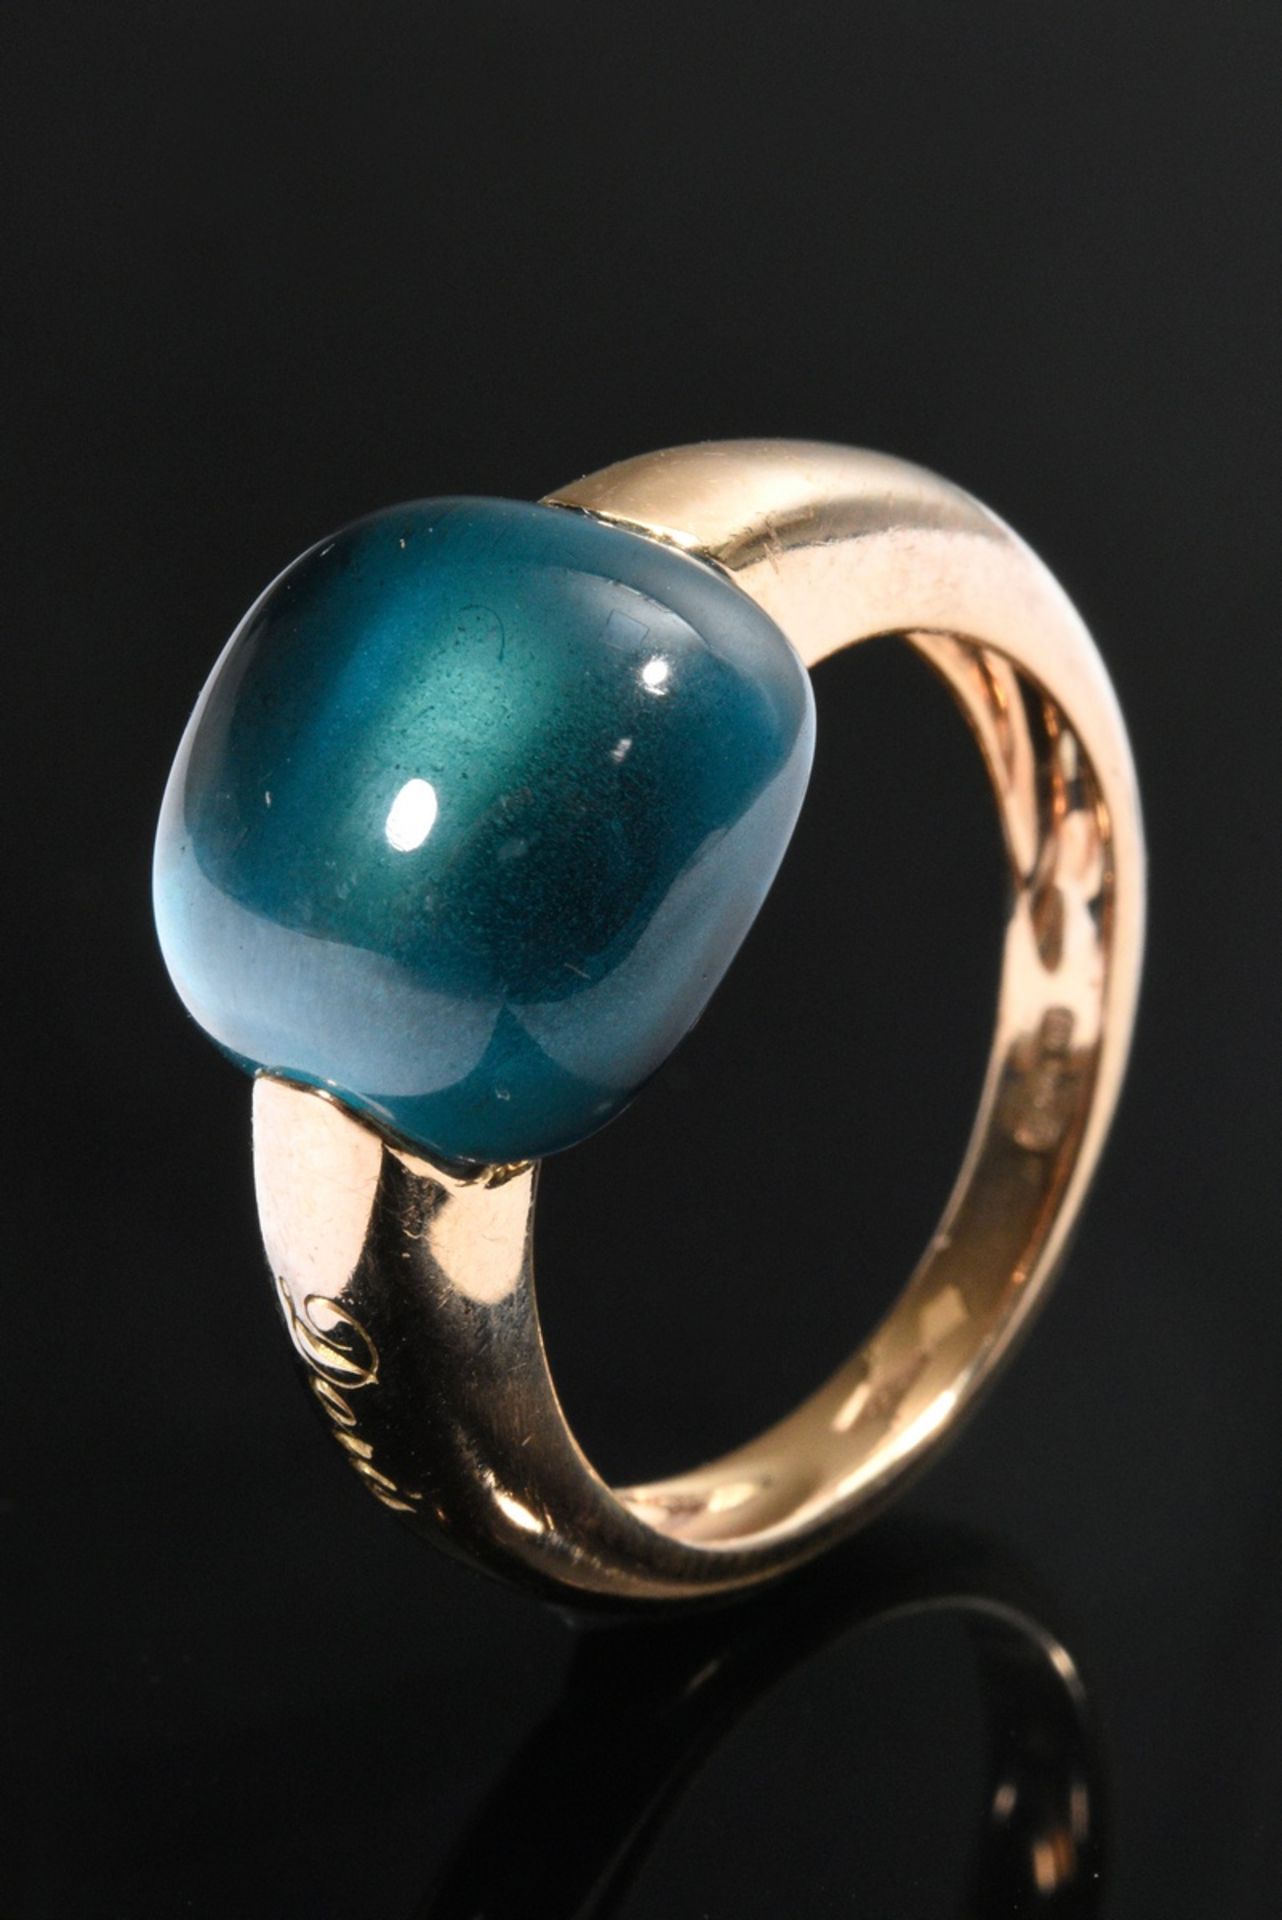 Doris Gioielli Roségold 750 Ring mit Blue London Topas Cabochon (11,8x12mm), sign., 7,4g, Gr. 56